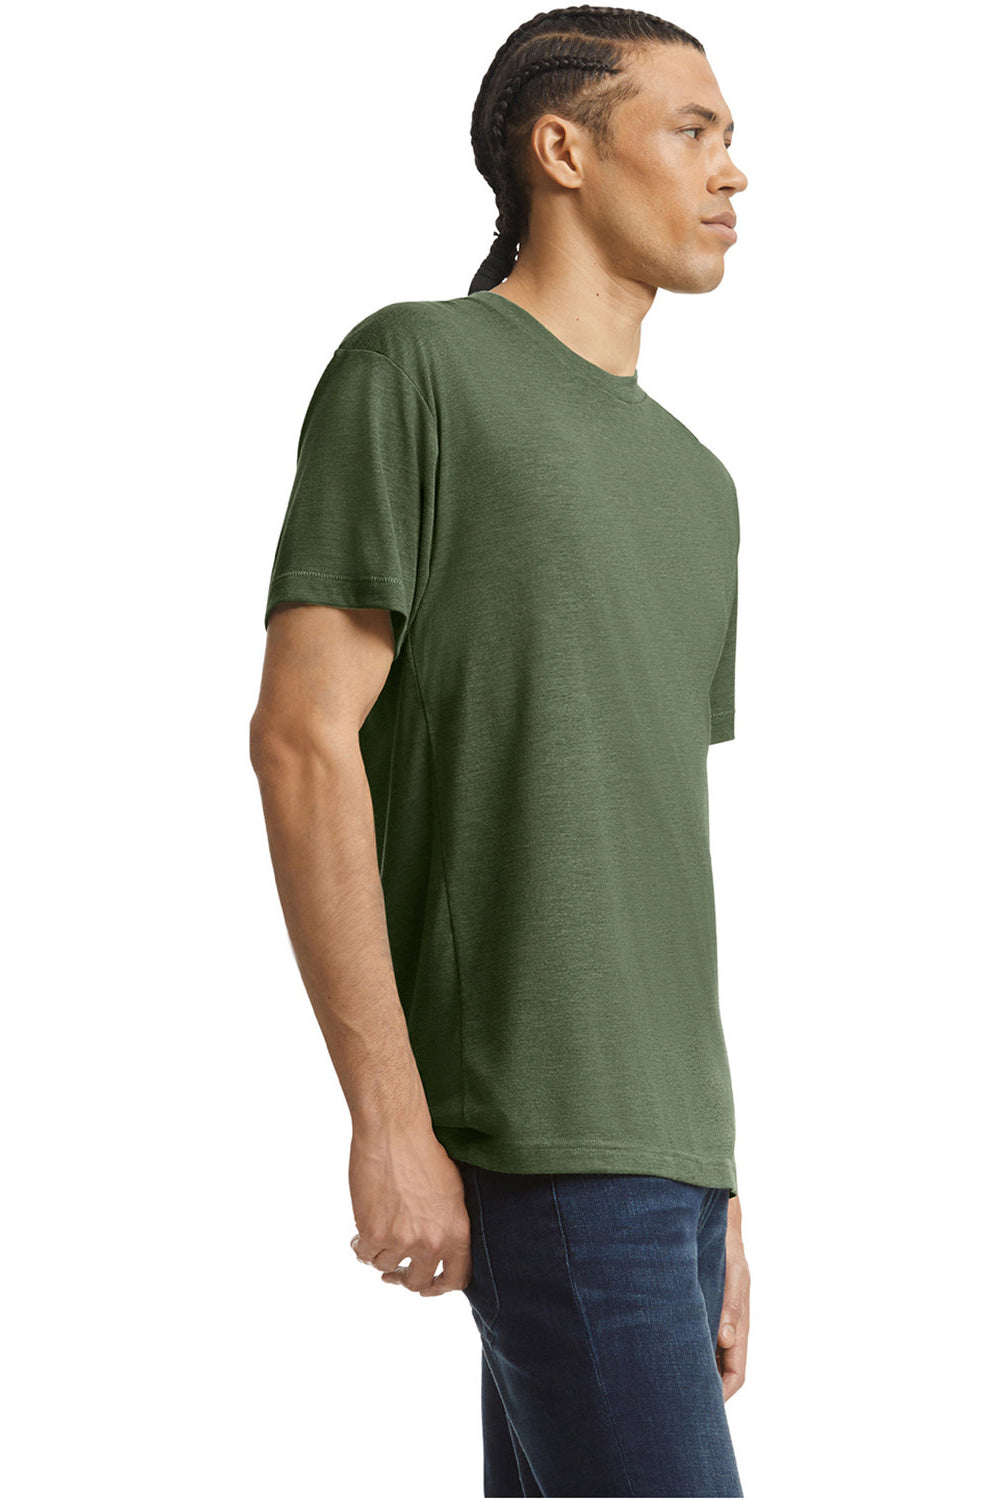 American Apparel TR401 Mens Track Short Sleeve Crewneck T-Shirt Olive Green Model Side